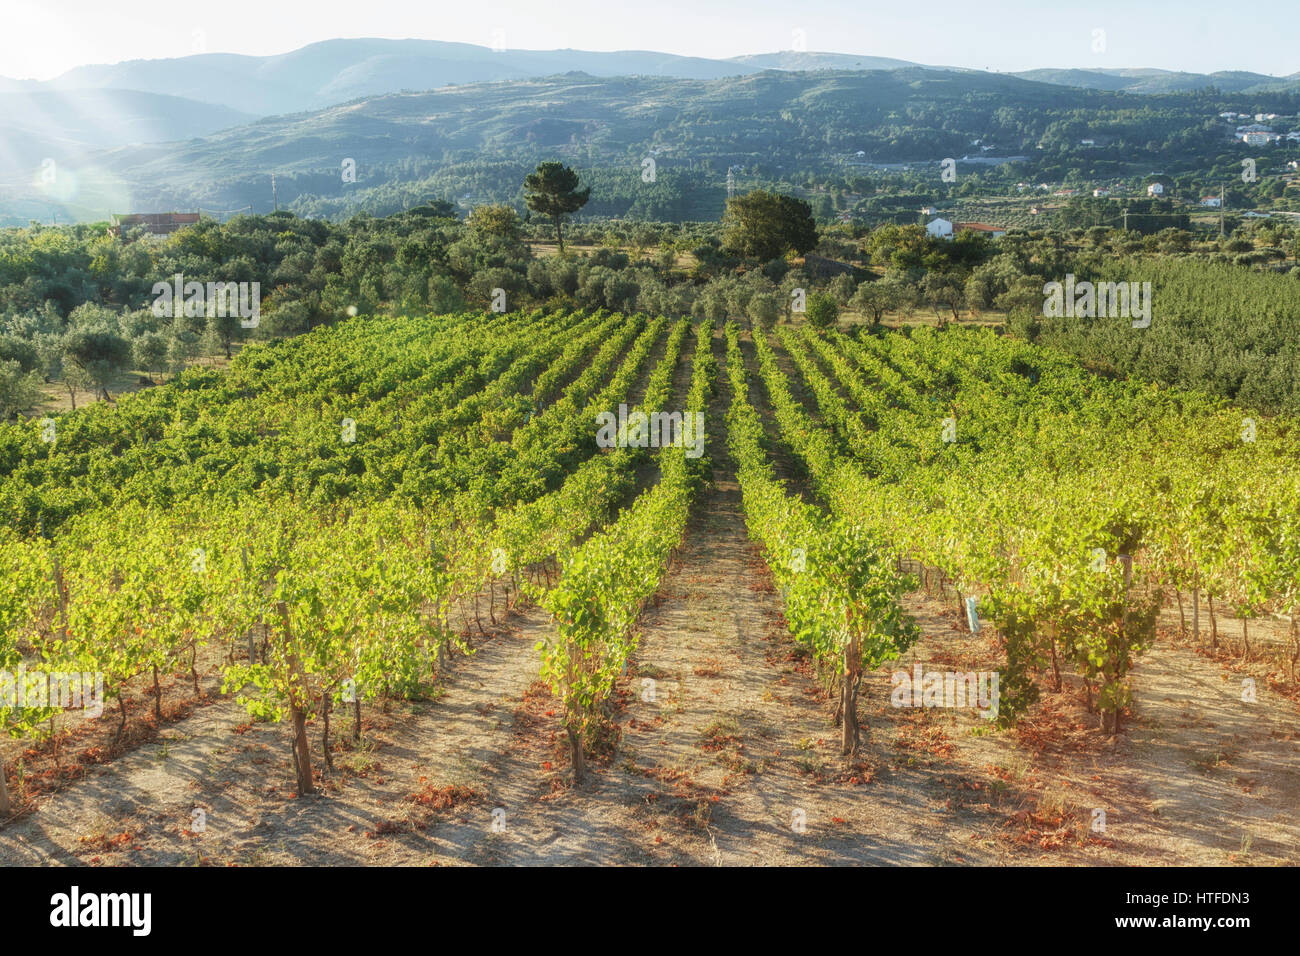 Vineyard - rows of vines - Grape harvest - Quinta do Aral vineyard  - morning light with Serra da Estrela hills in the background Stock Photo